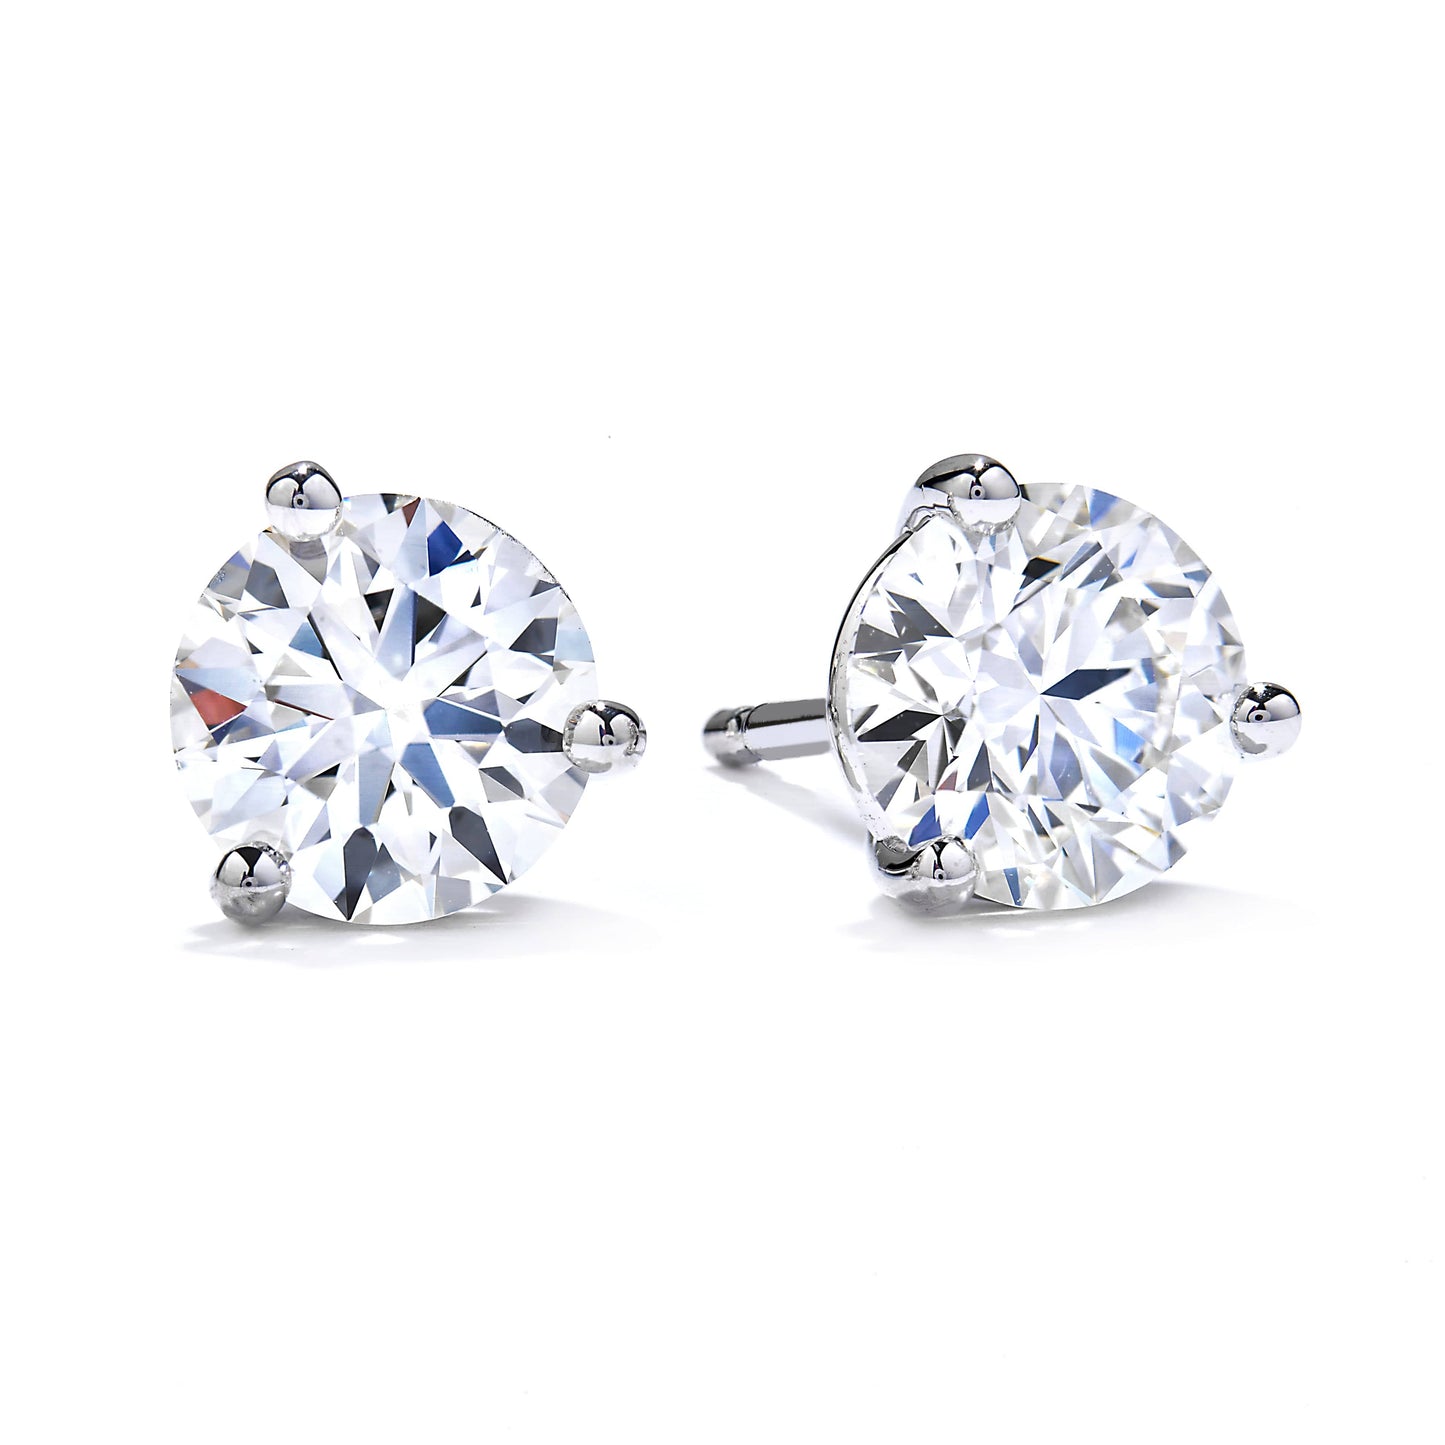 Mountz Collection Lab Grown Diamond Stud Earrings in 14K White Gold